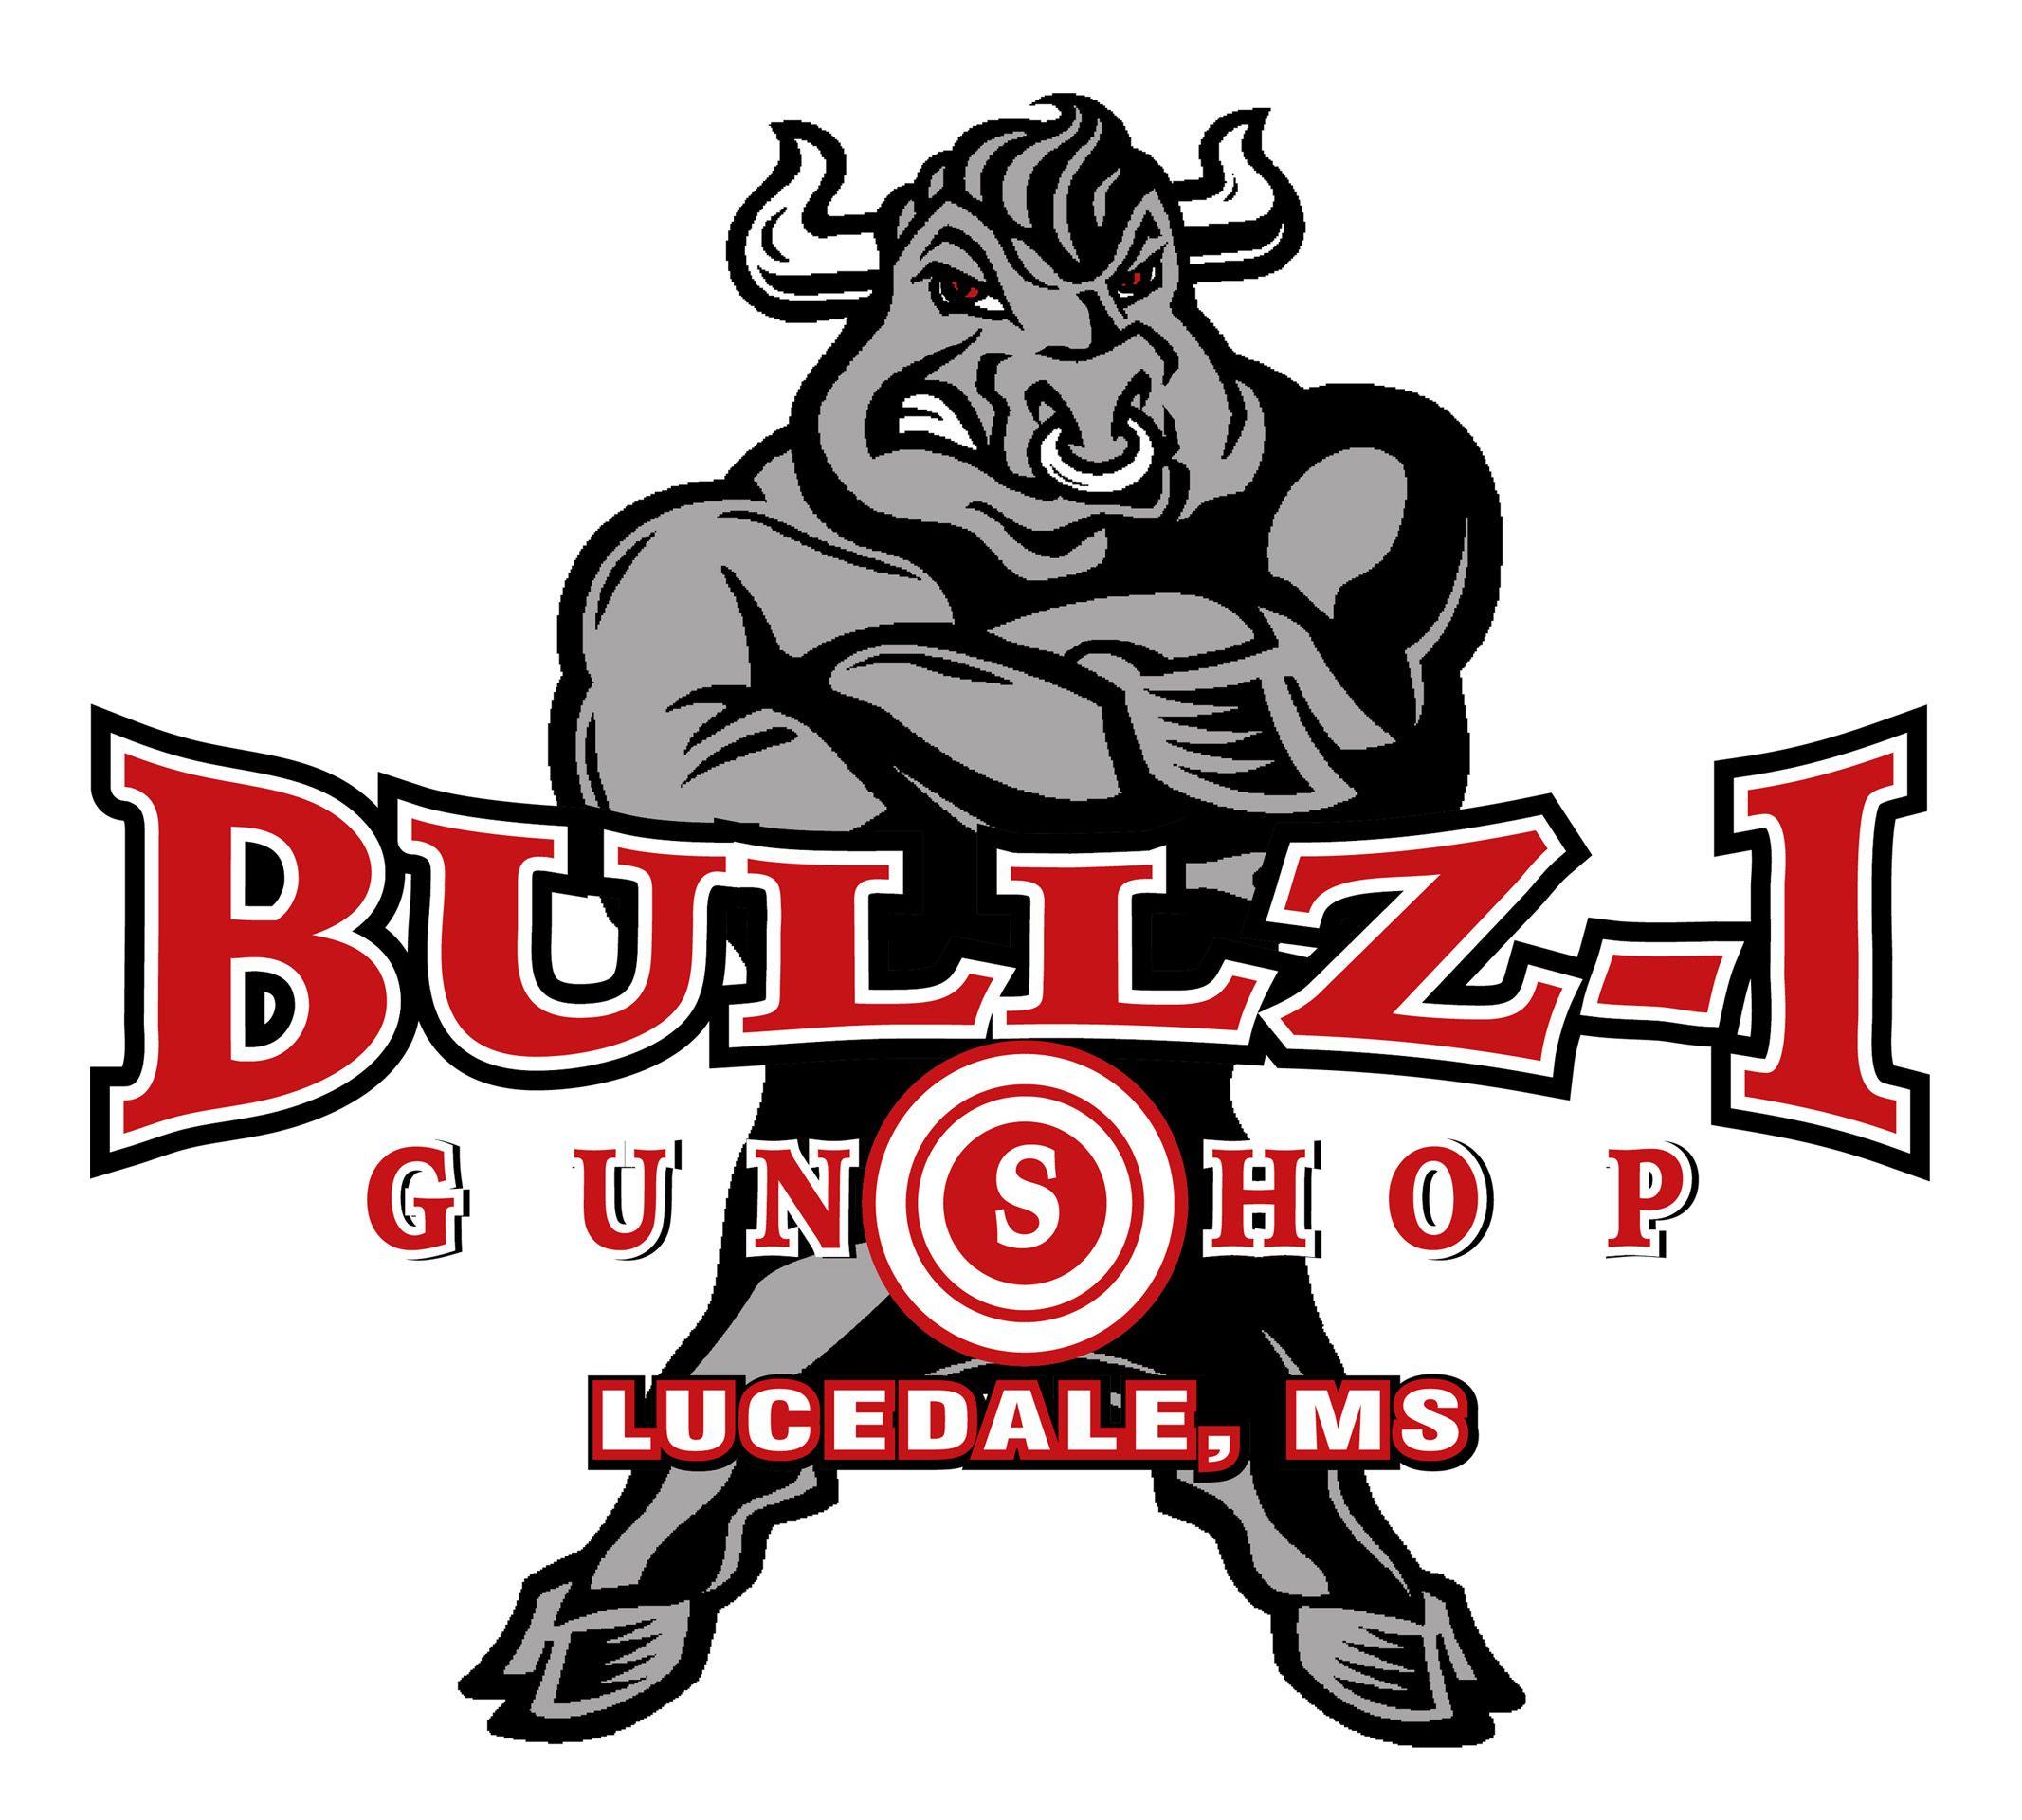 Bullz Logo - Bullz-I Sports (@BullzISports) | Twitter